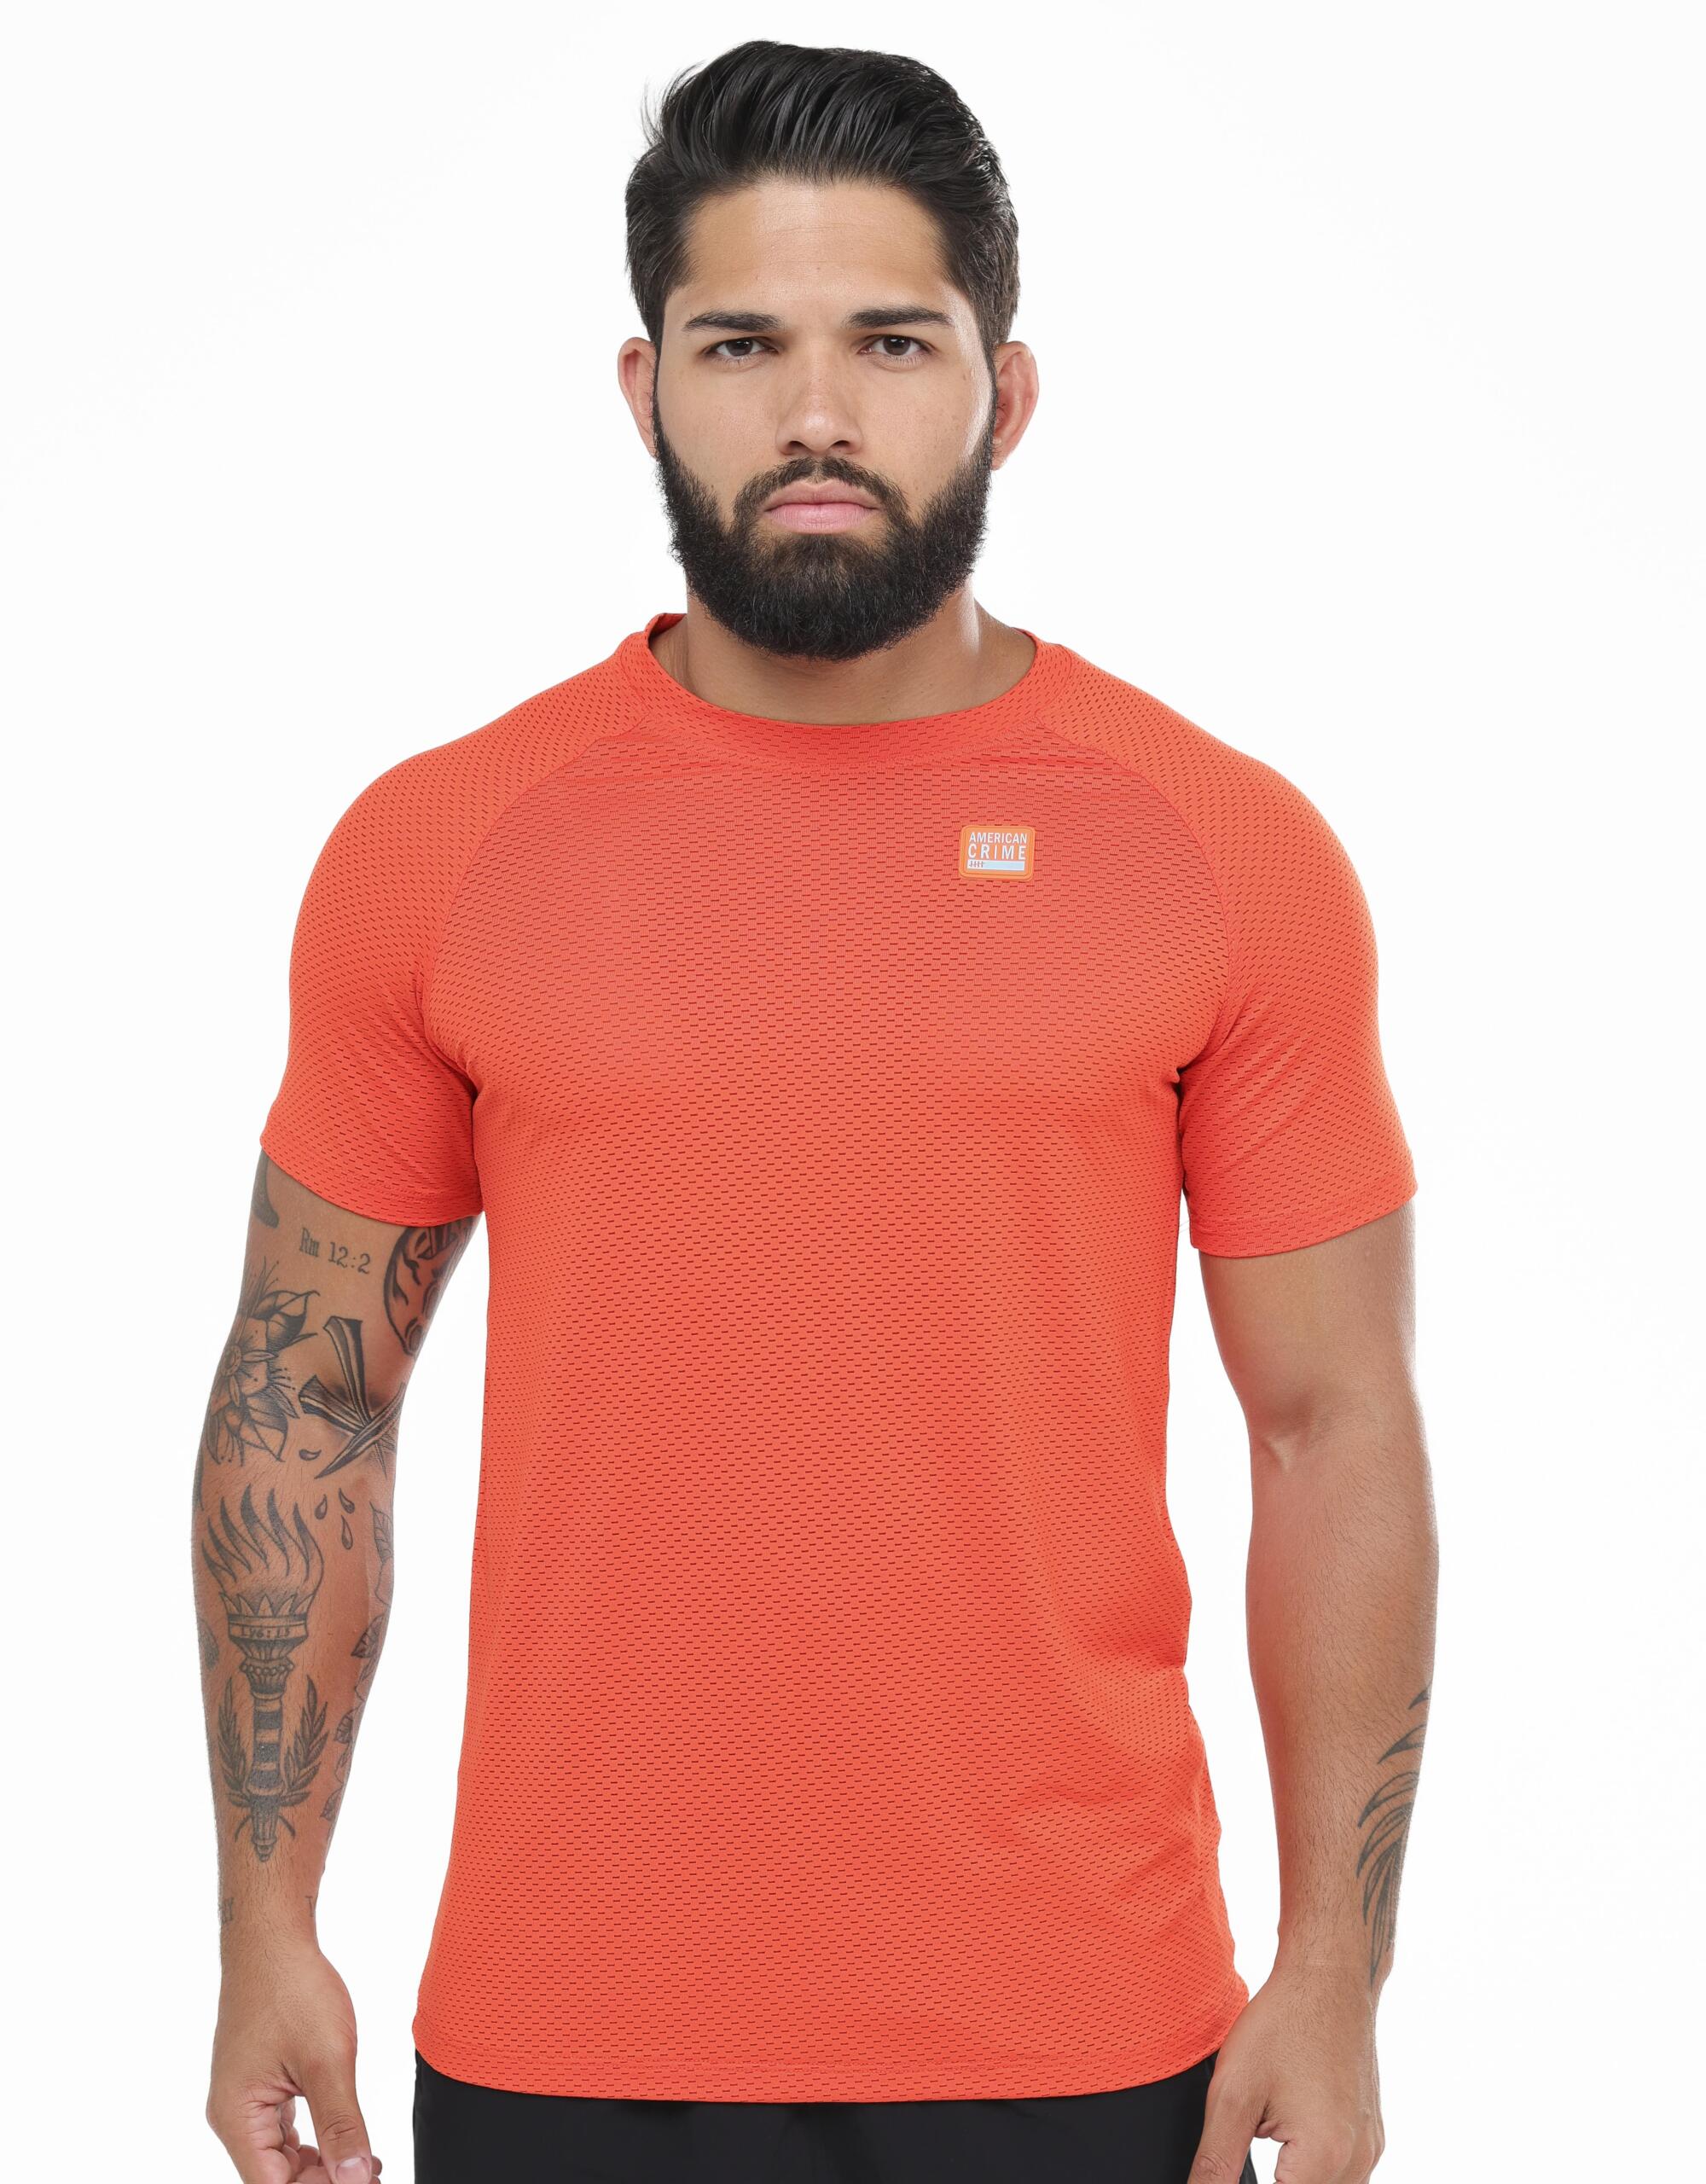 Camiseta Training Air Shoulder Tangerine 3-min